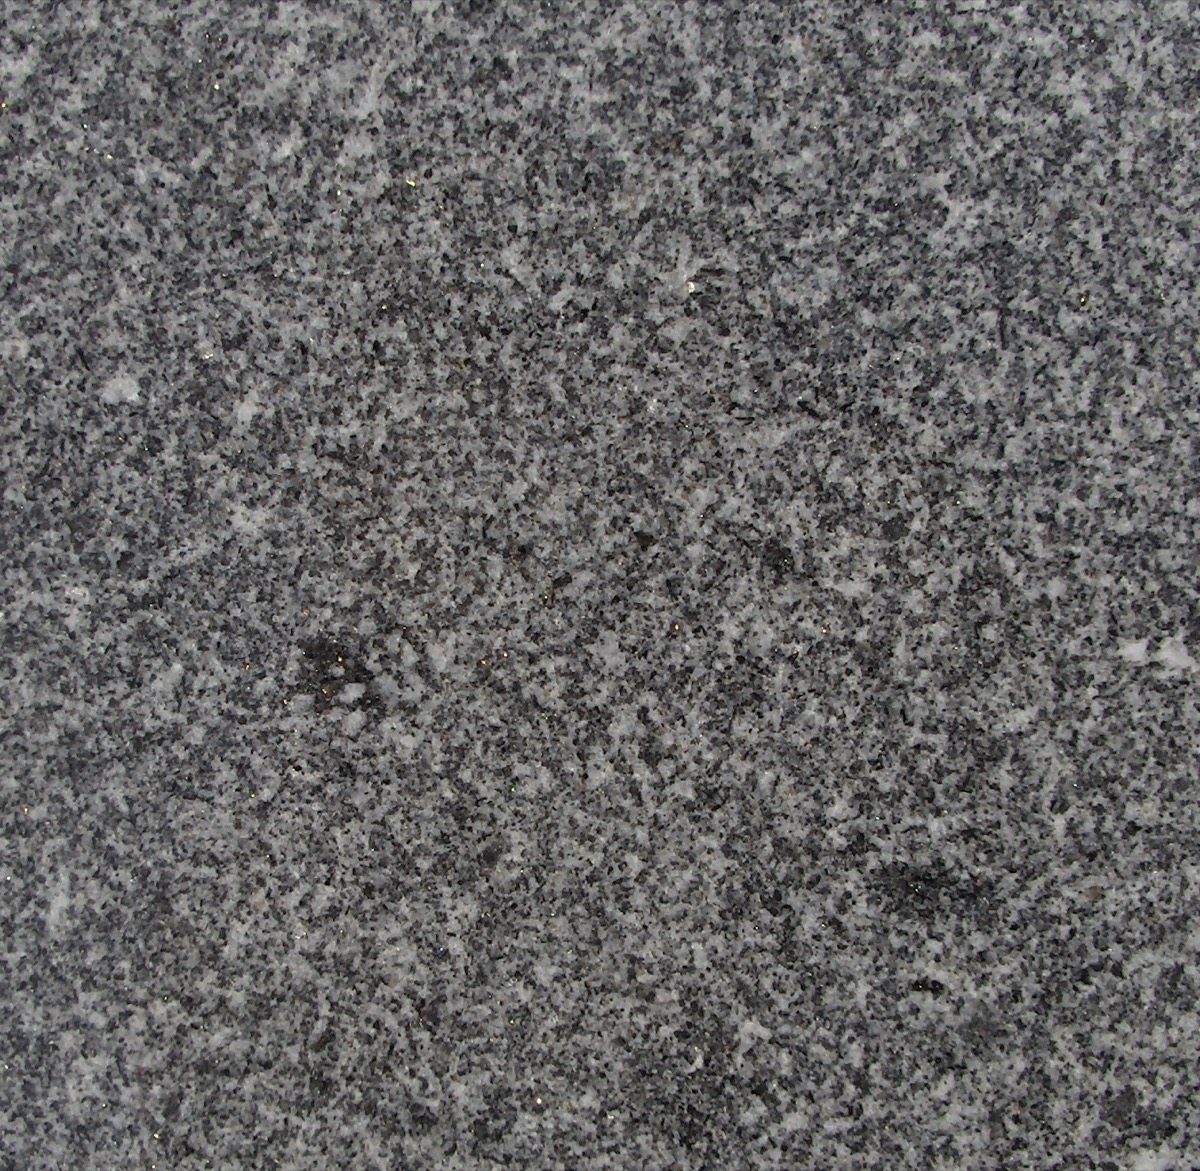 granit noir roriz poli